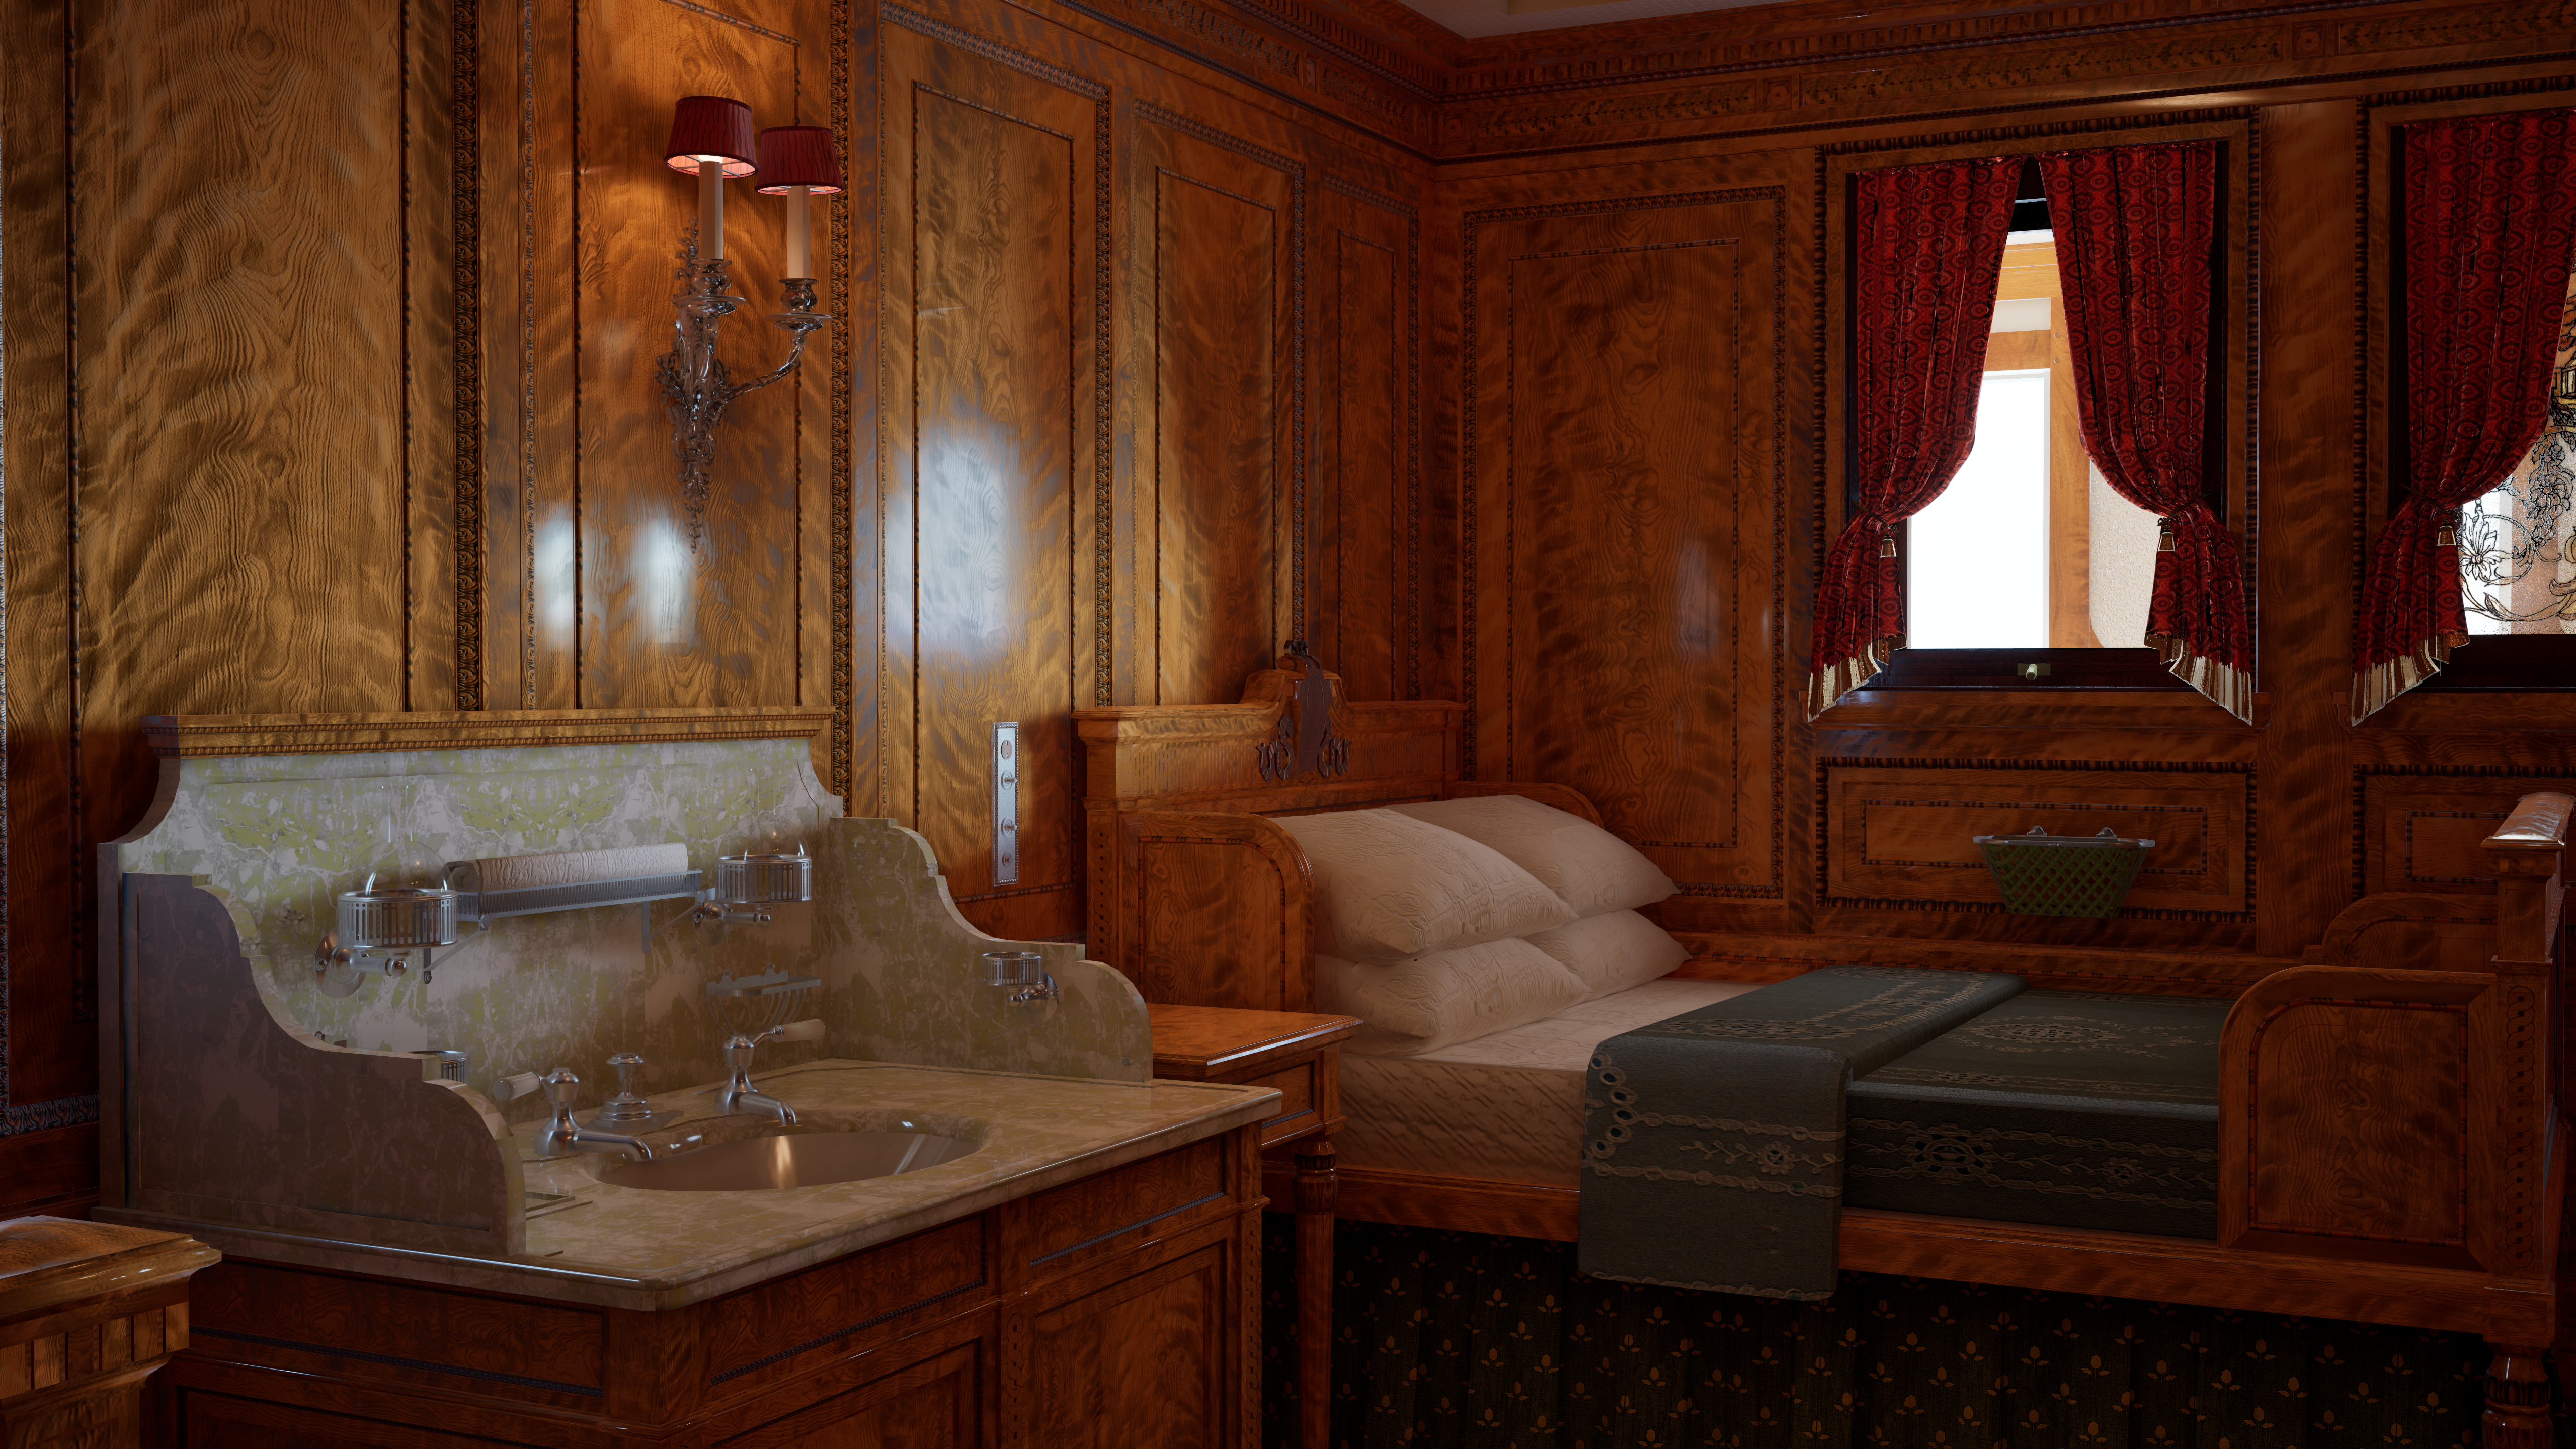 Titanic Video Games CGi Interior Bed Pillow Sink Window Curtains 5120x2880